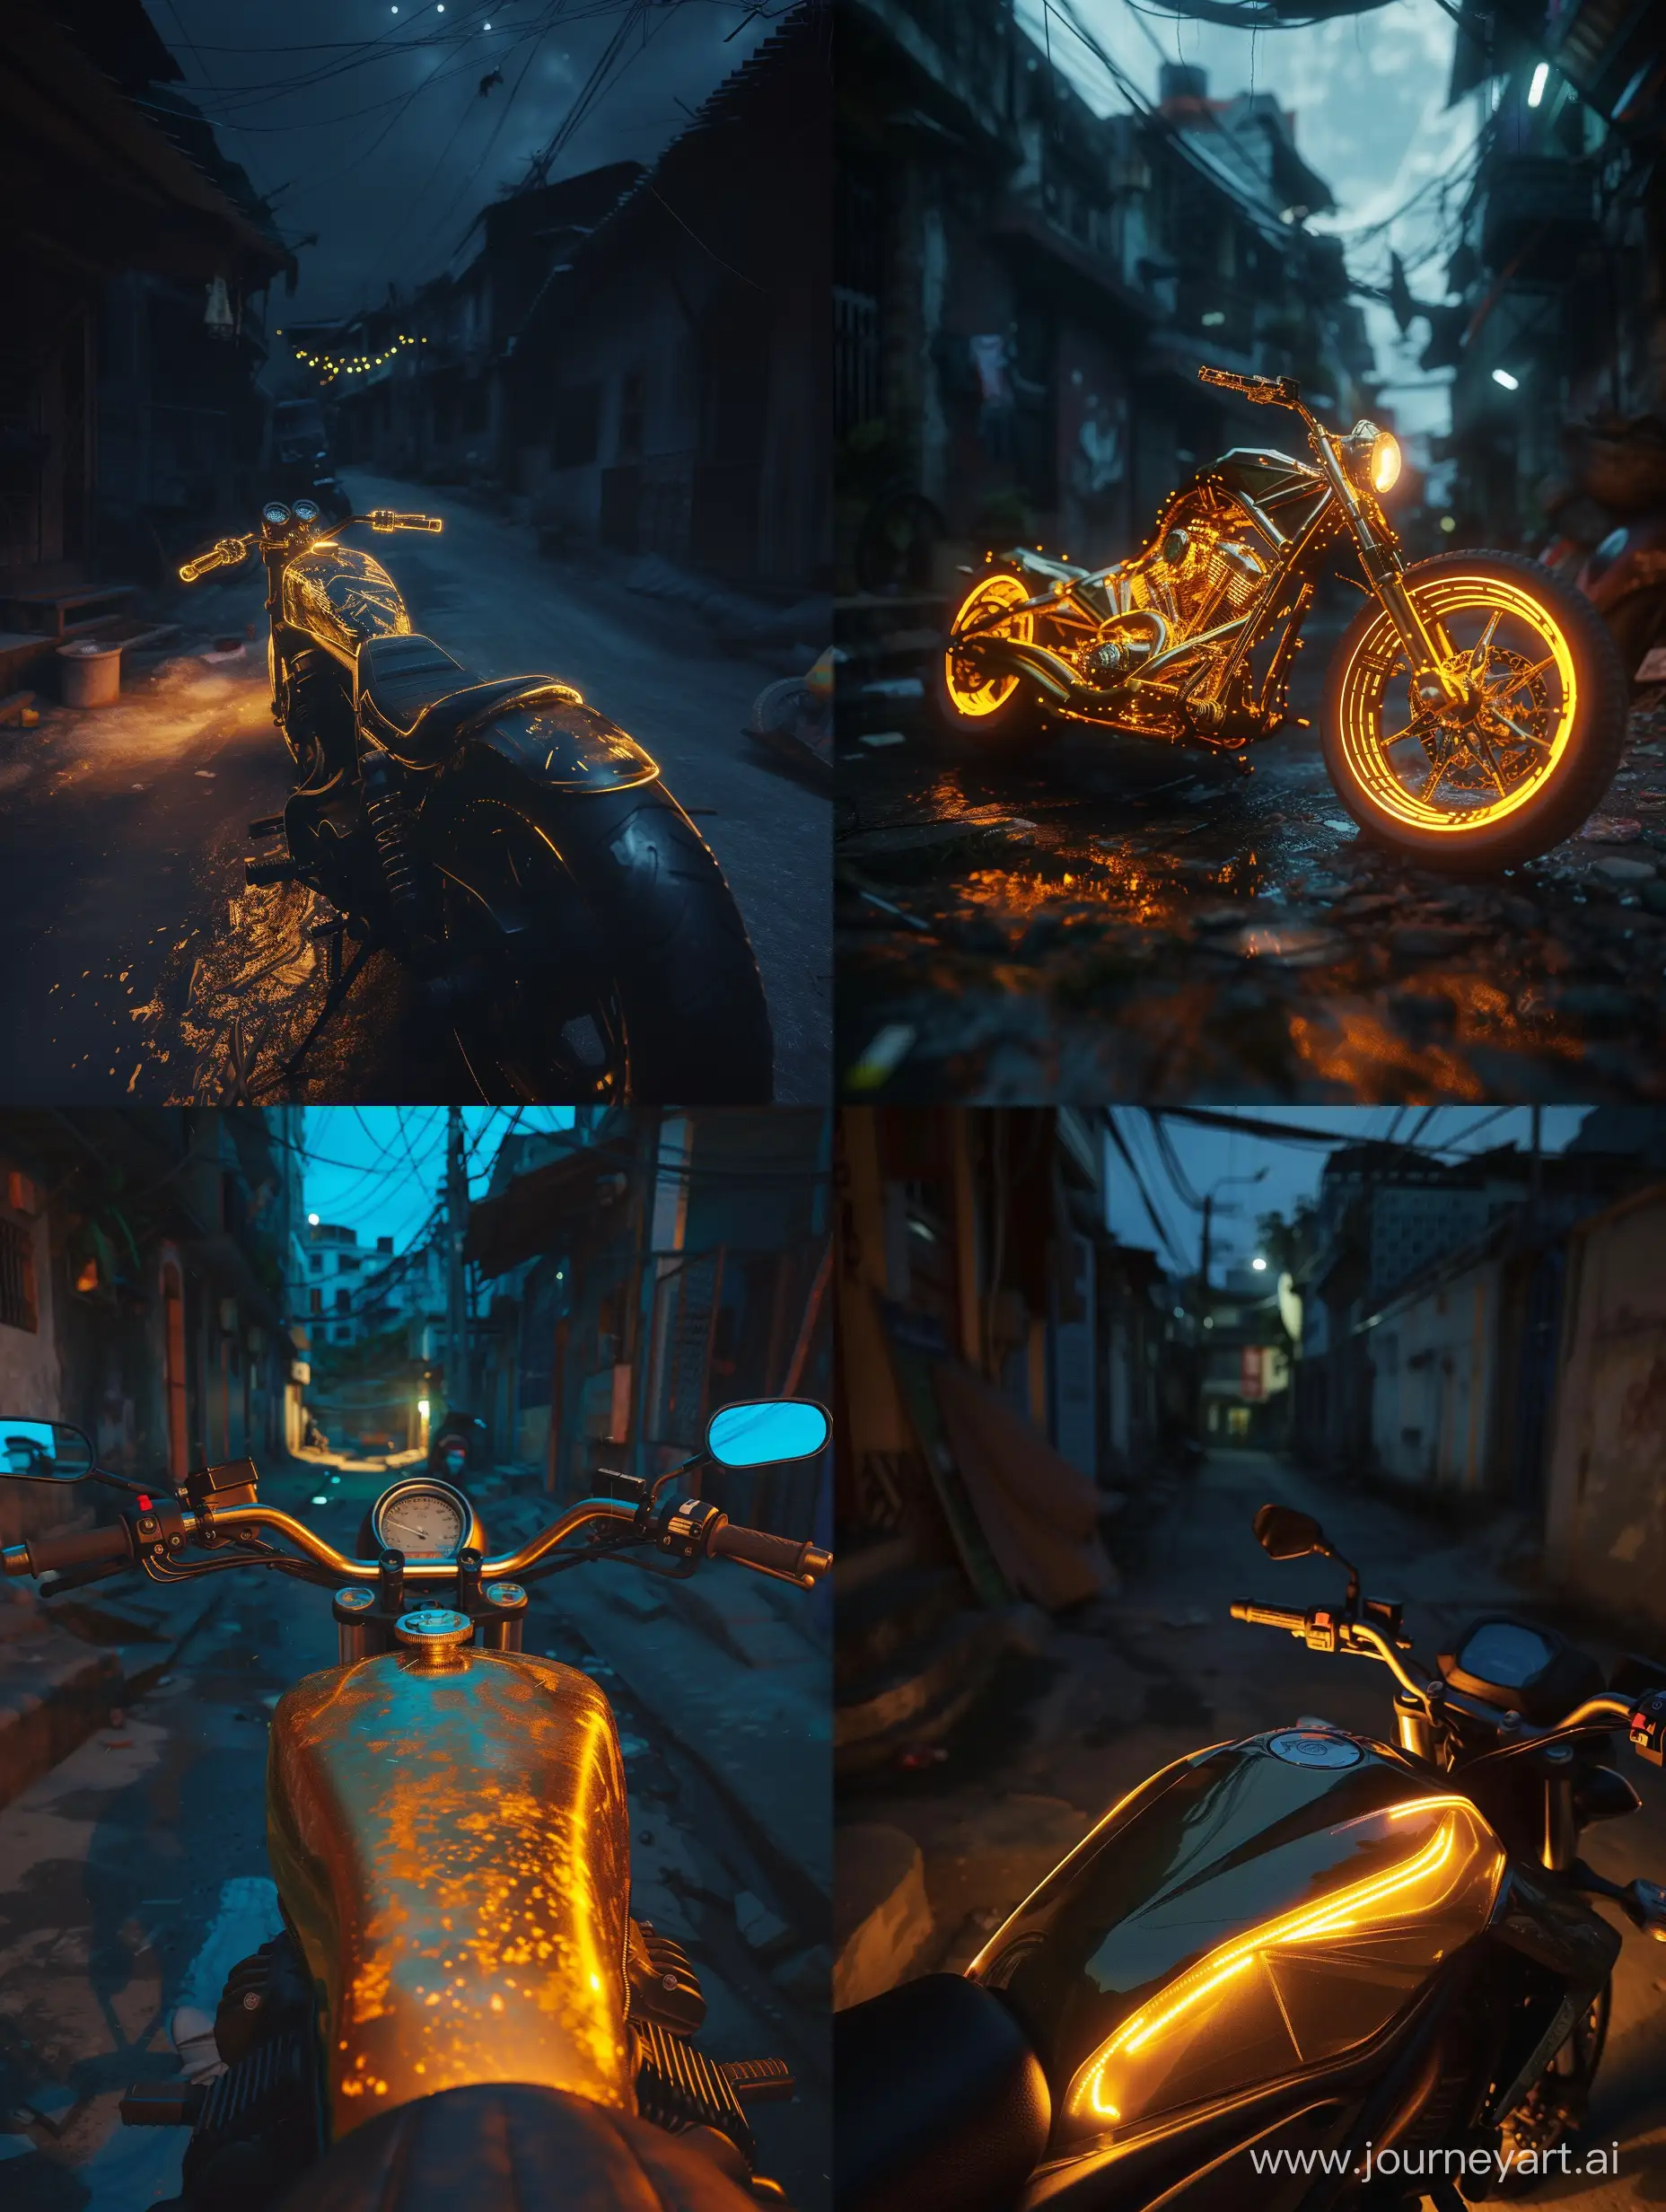 Golden-Glowing-Motorcycle-in-Moonlit-Urban-Neighborhood